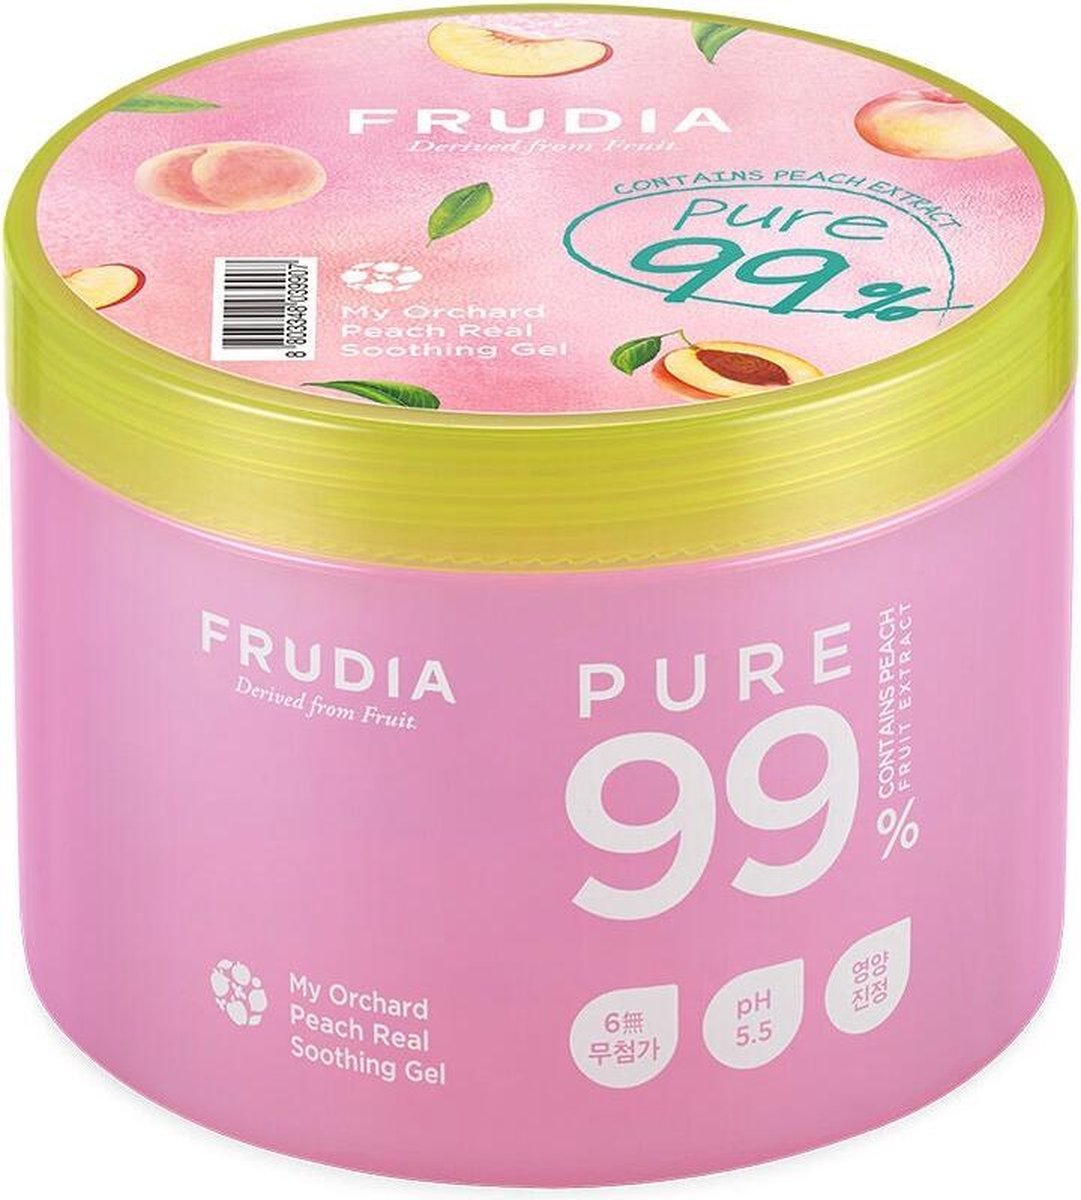 Frudia My Orchard Peach Real Soothing Gel 500g 300g / 500g - Frudia